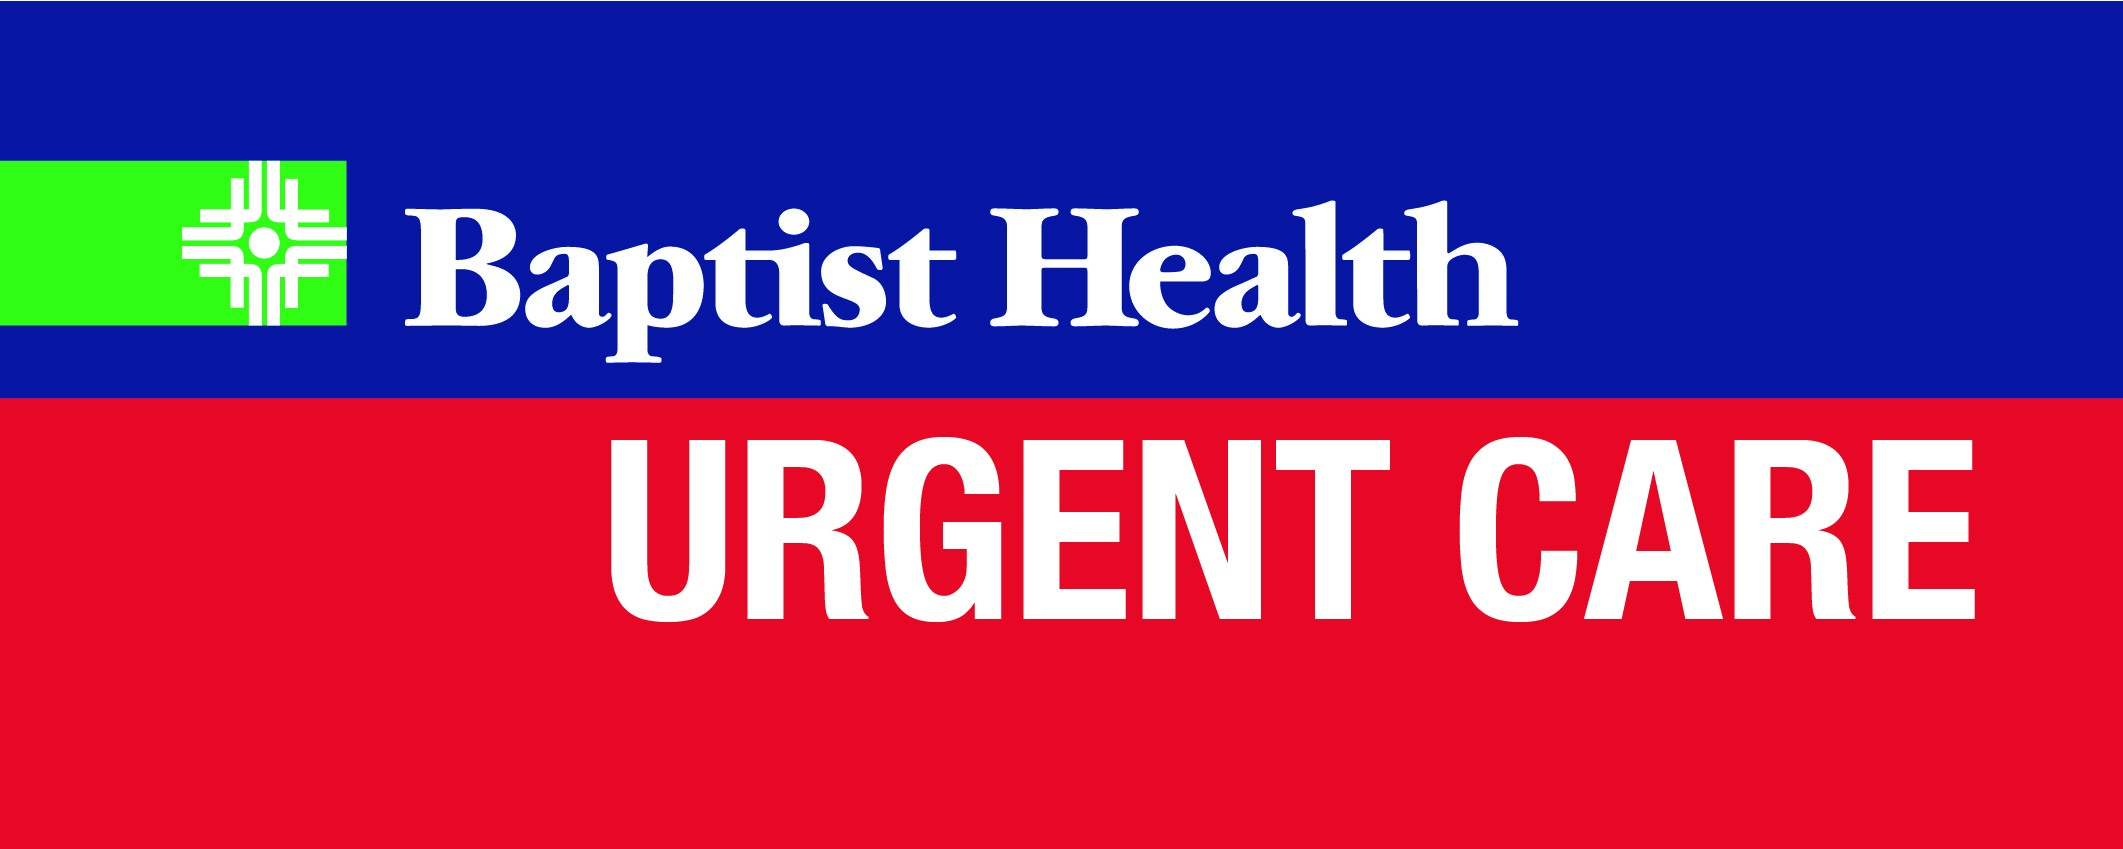 Baptist Health Urgent Care - Cabot Logo